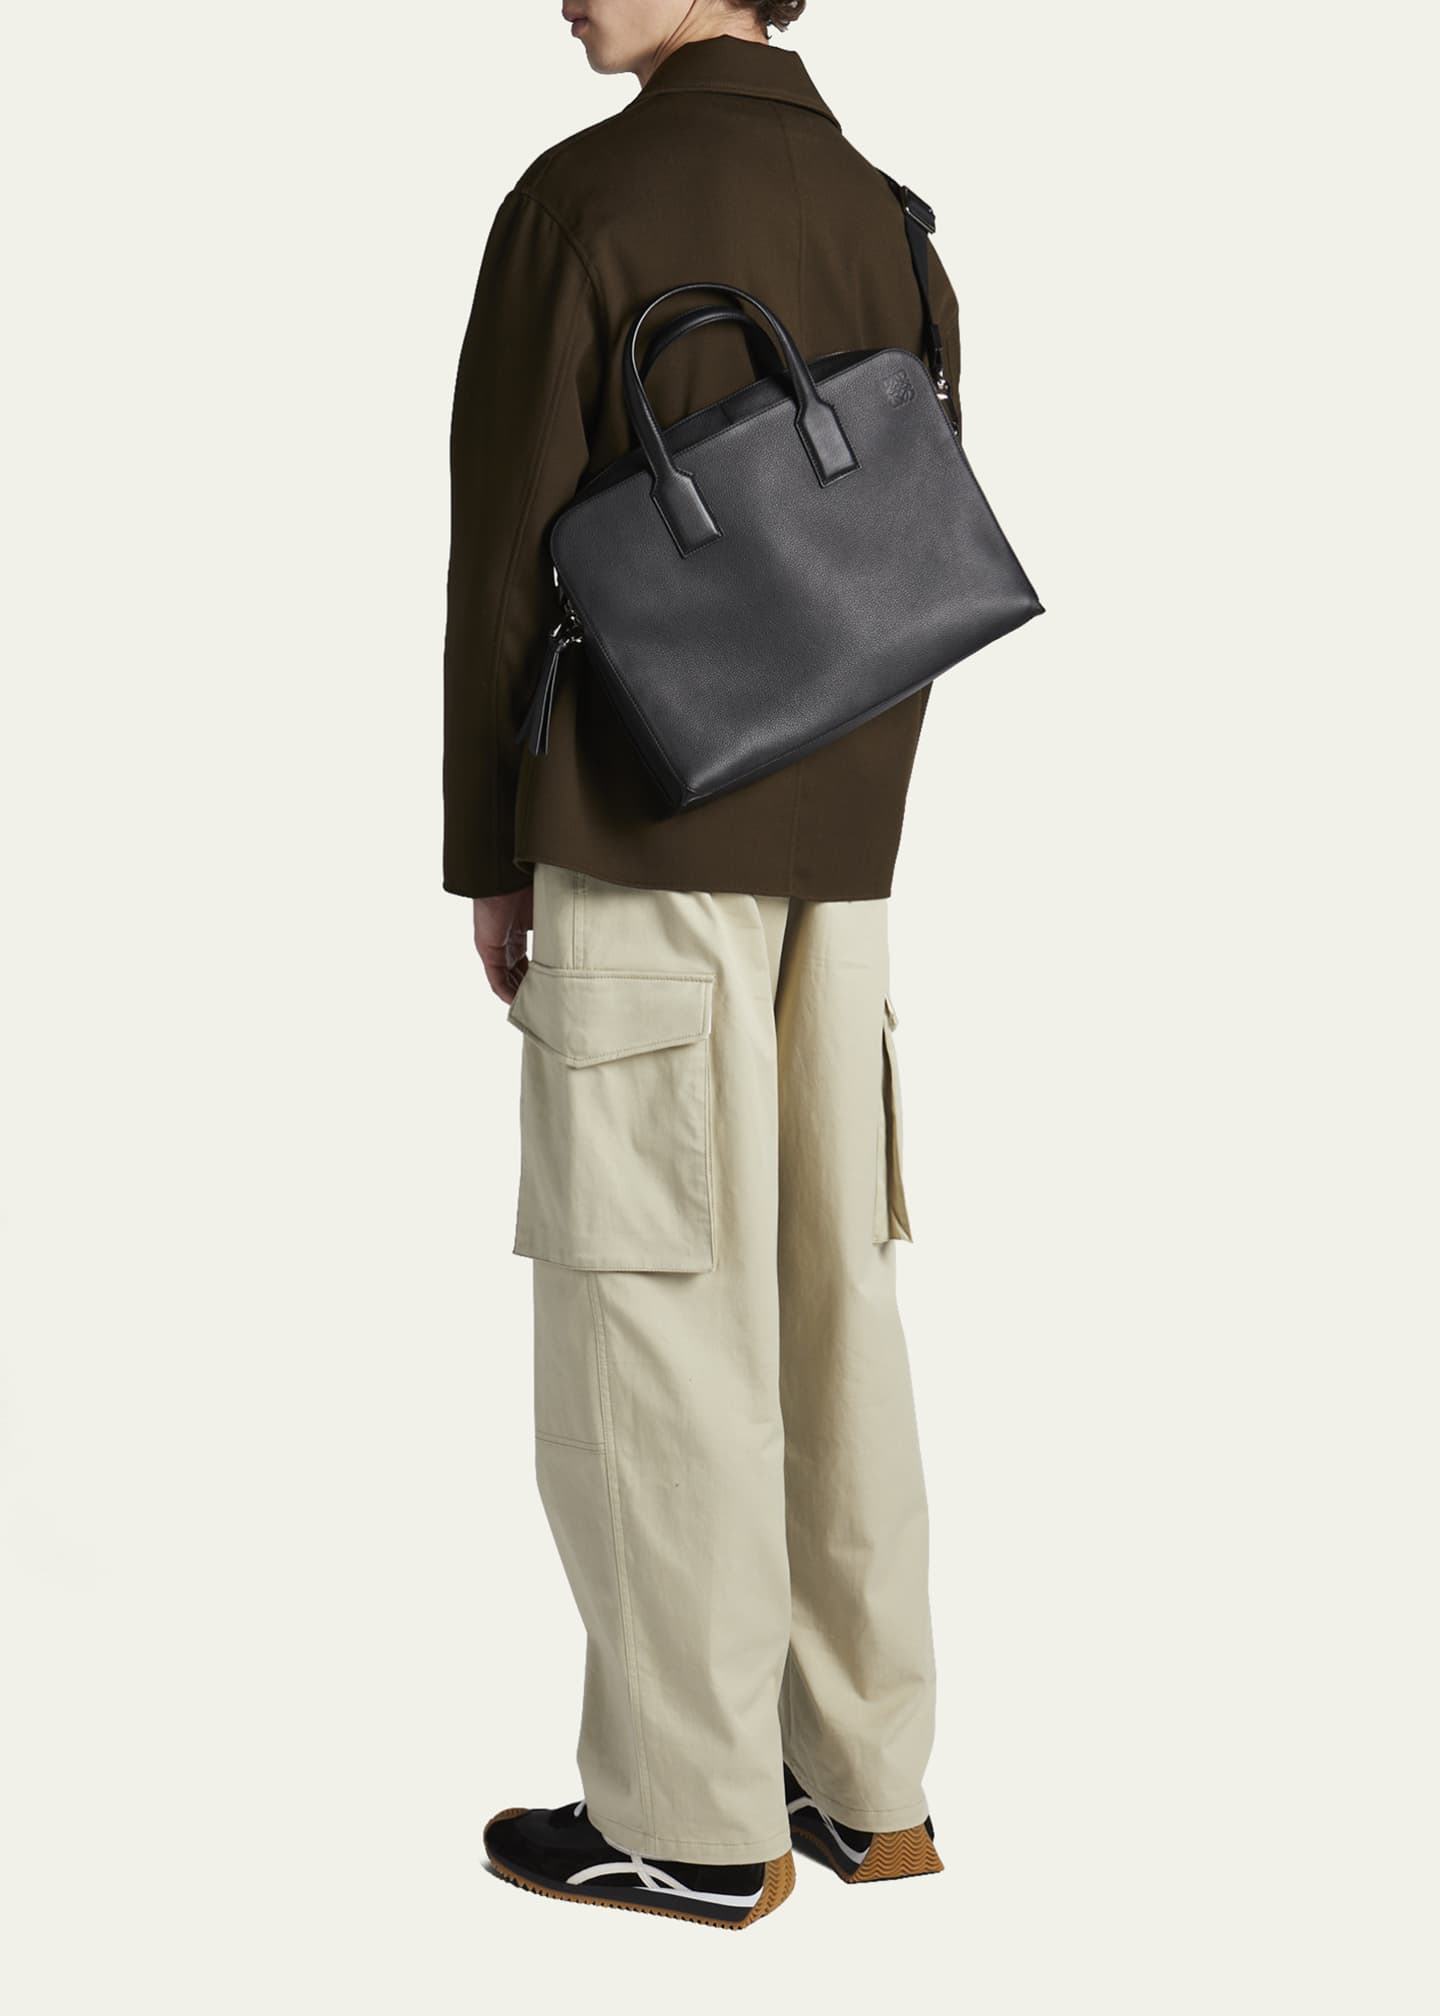 Loewe Men's Goya Thin Leather Briefcase Bag - Bergdorf Goodman